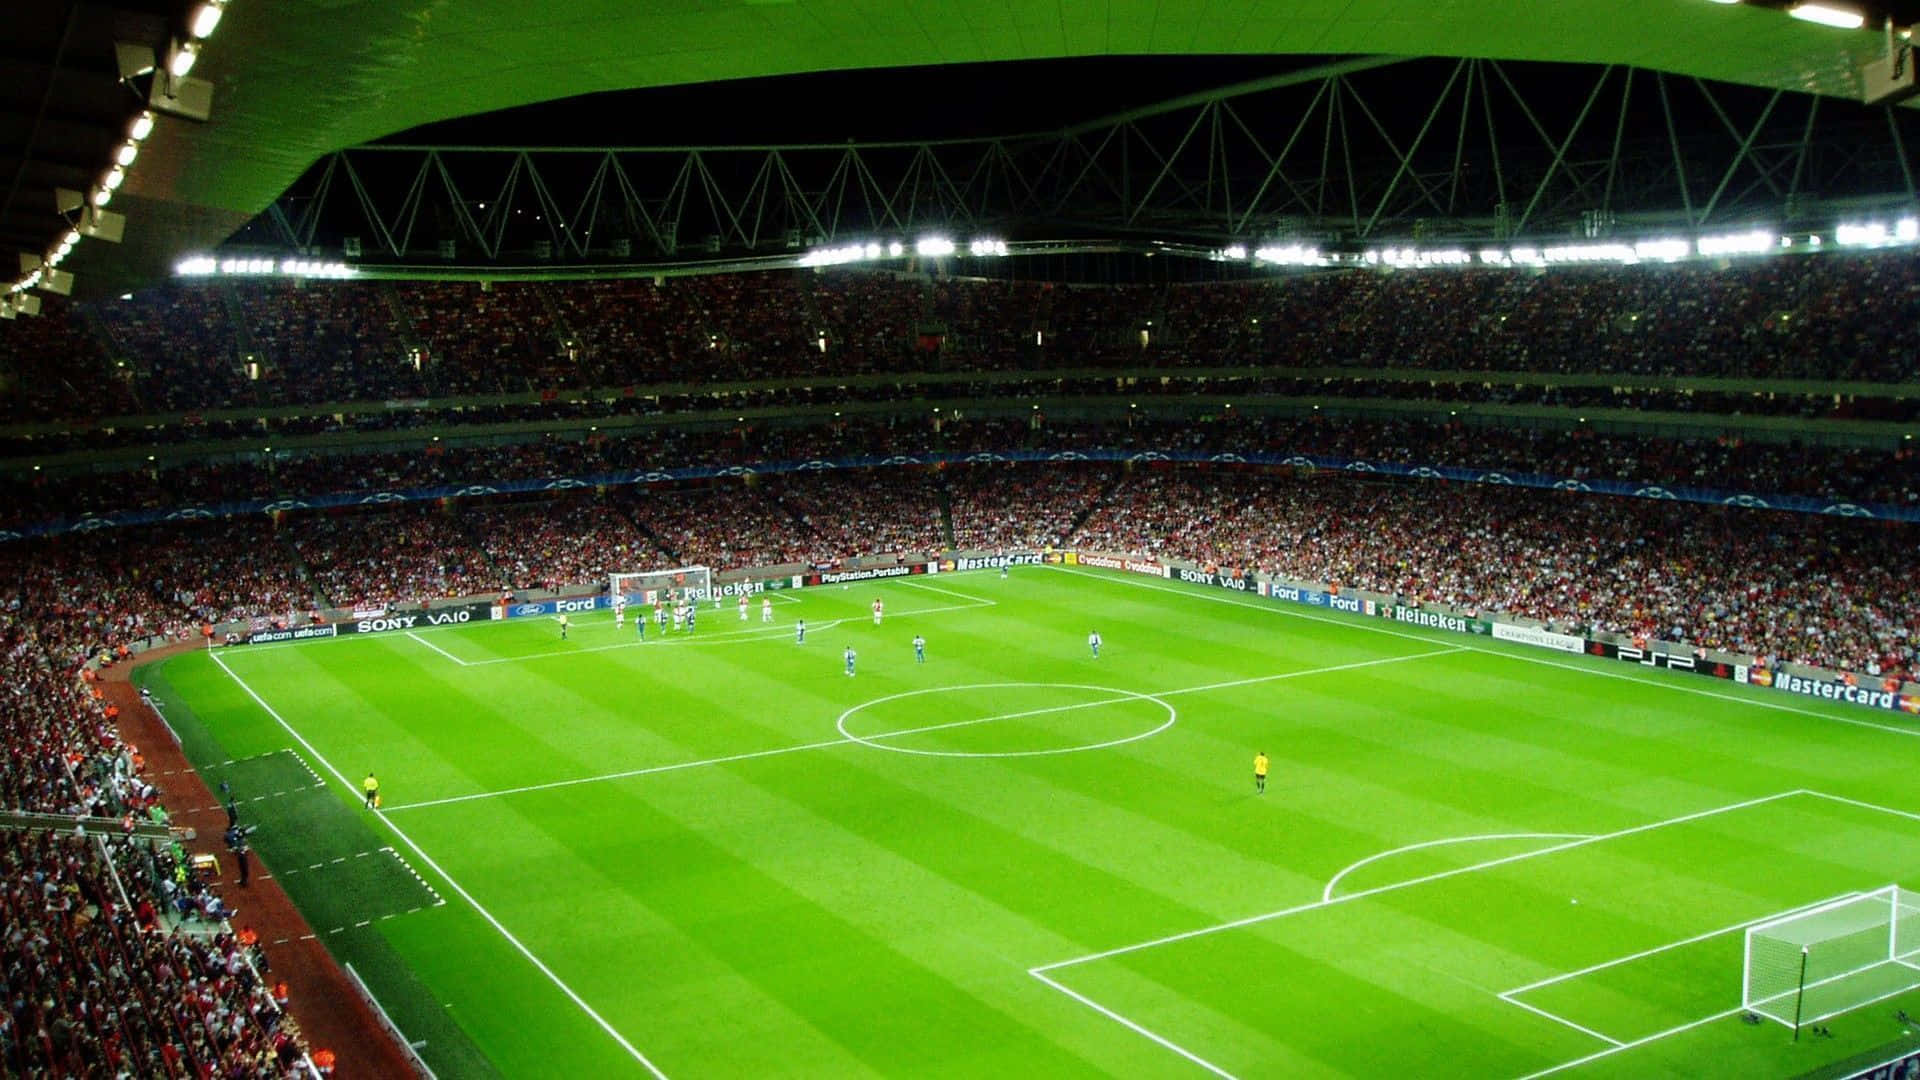 Emirates Stadium Football Field In England Wallpaper